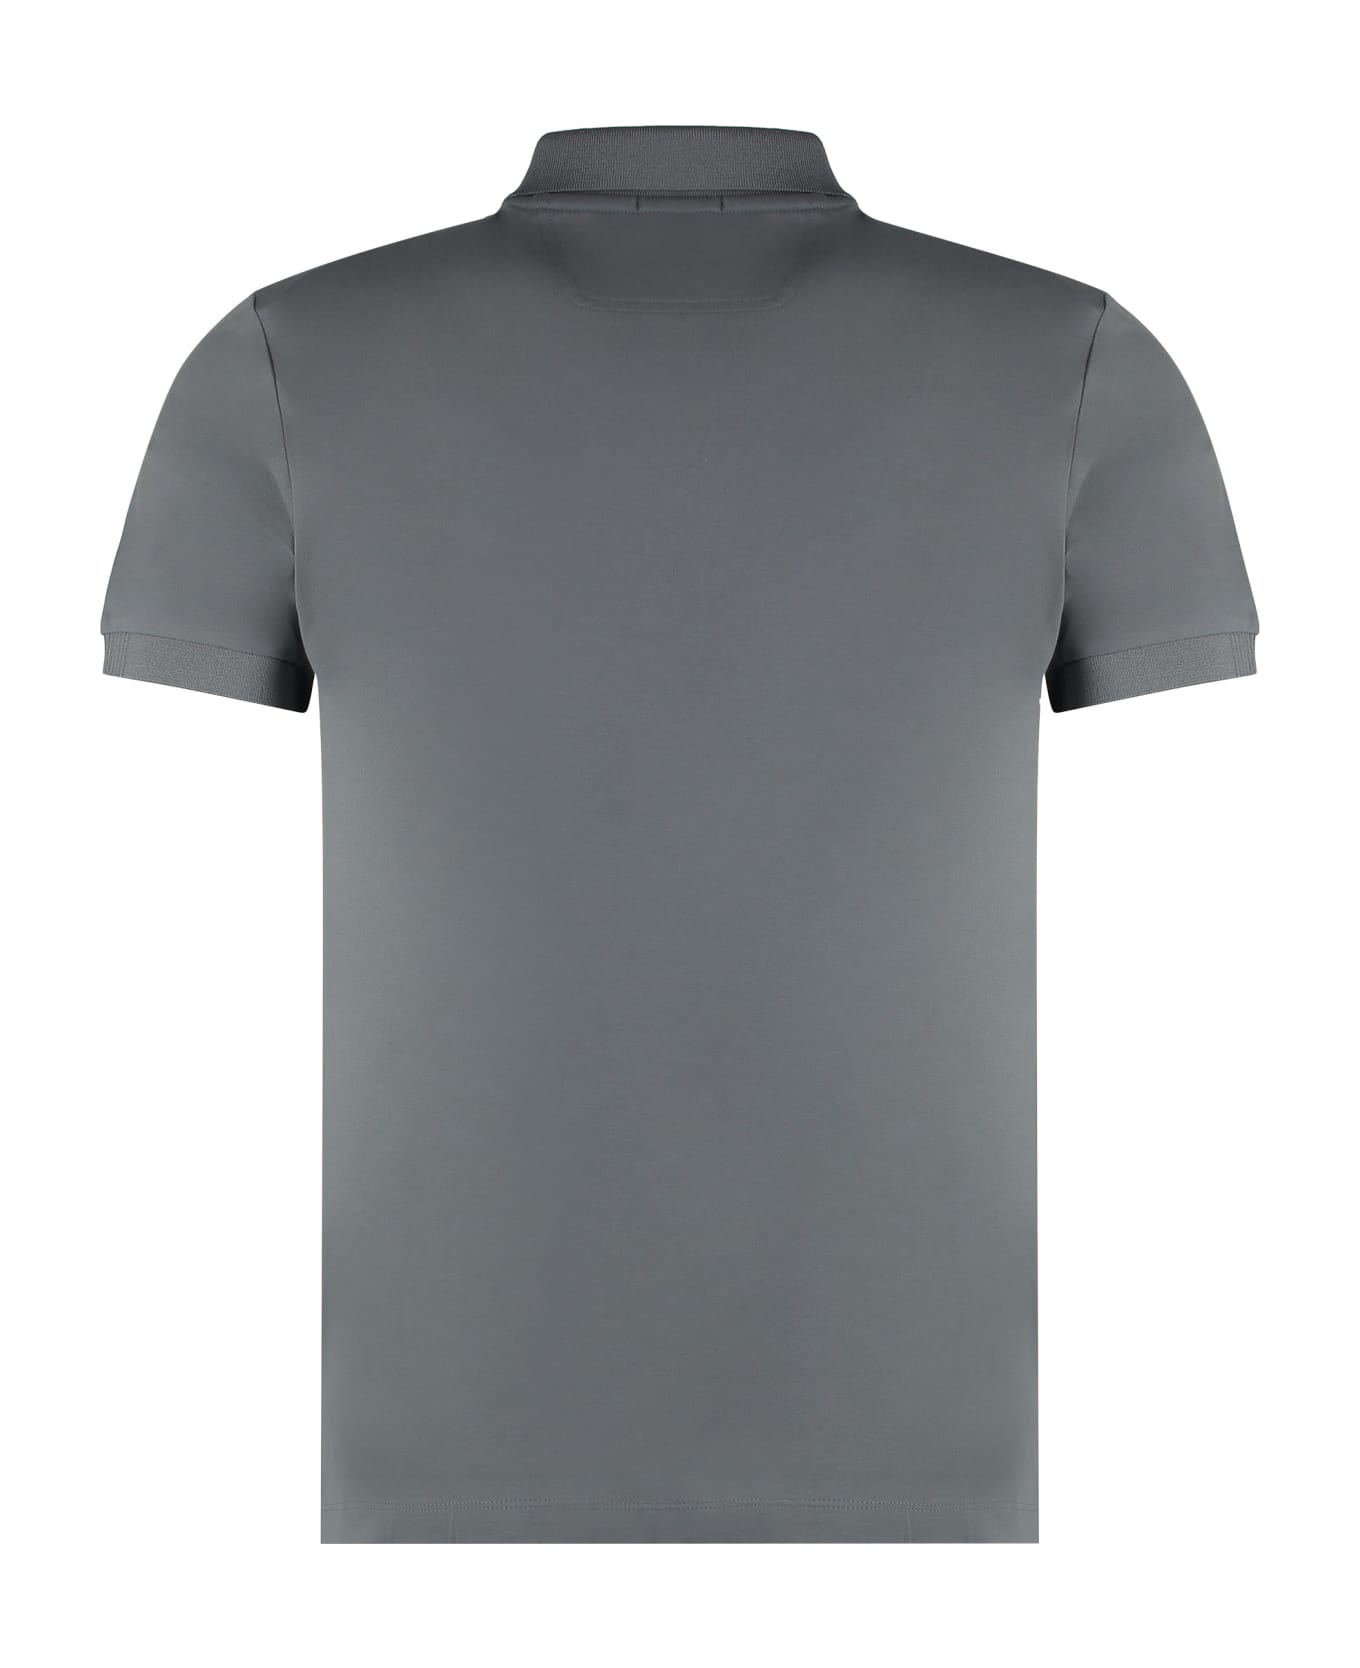 Hugo Boss Short Sleeve Cotton Polo Shirt - grey